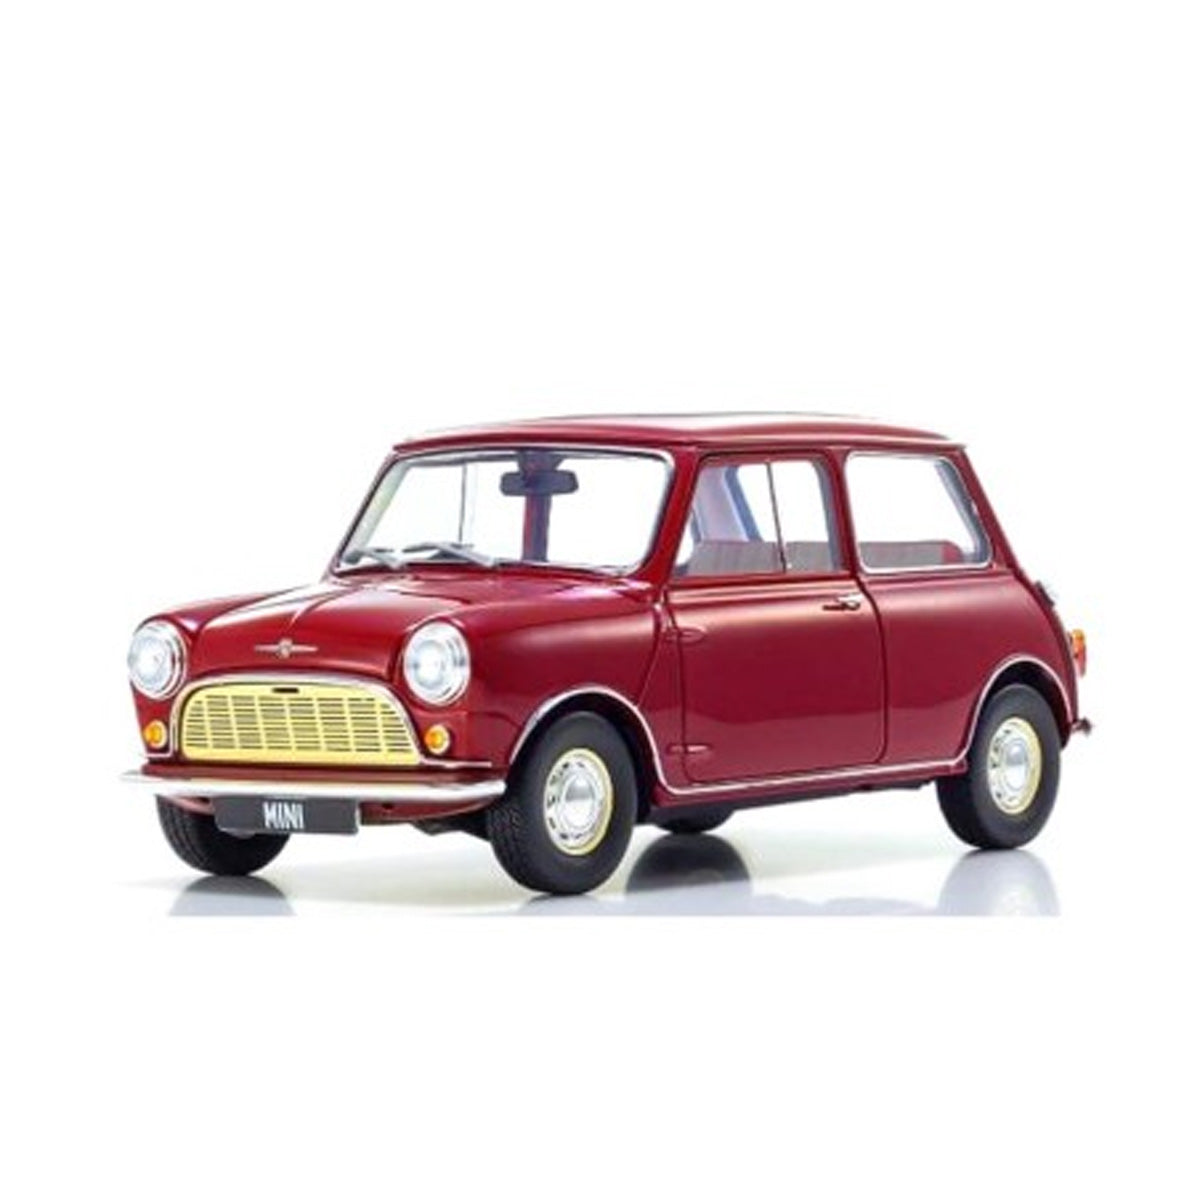 Morris Mini Minor Cherry Red - 1:18 Scale Diecast Model Car